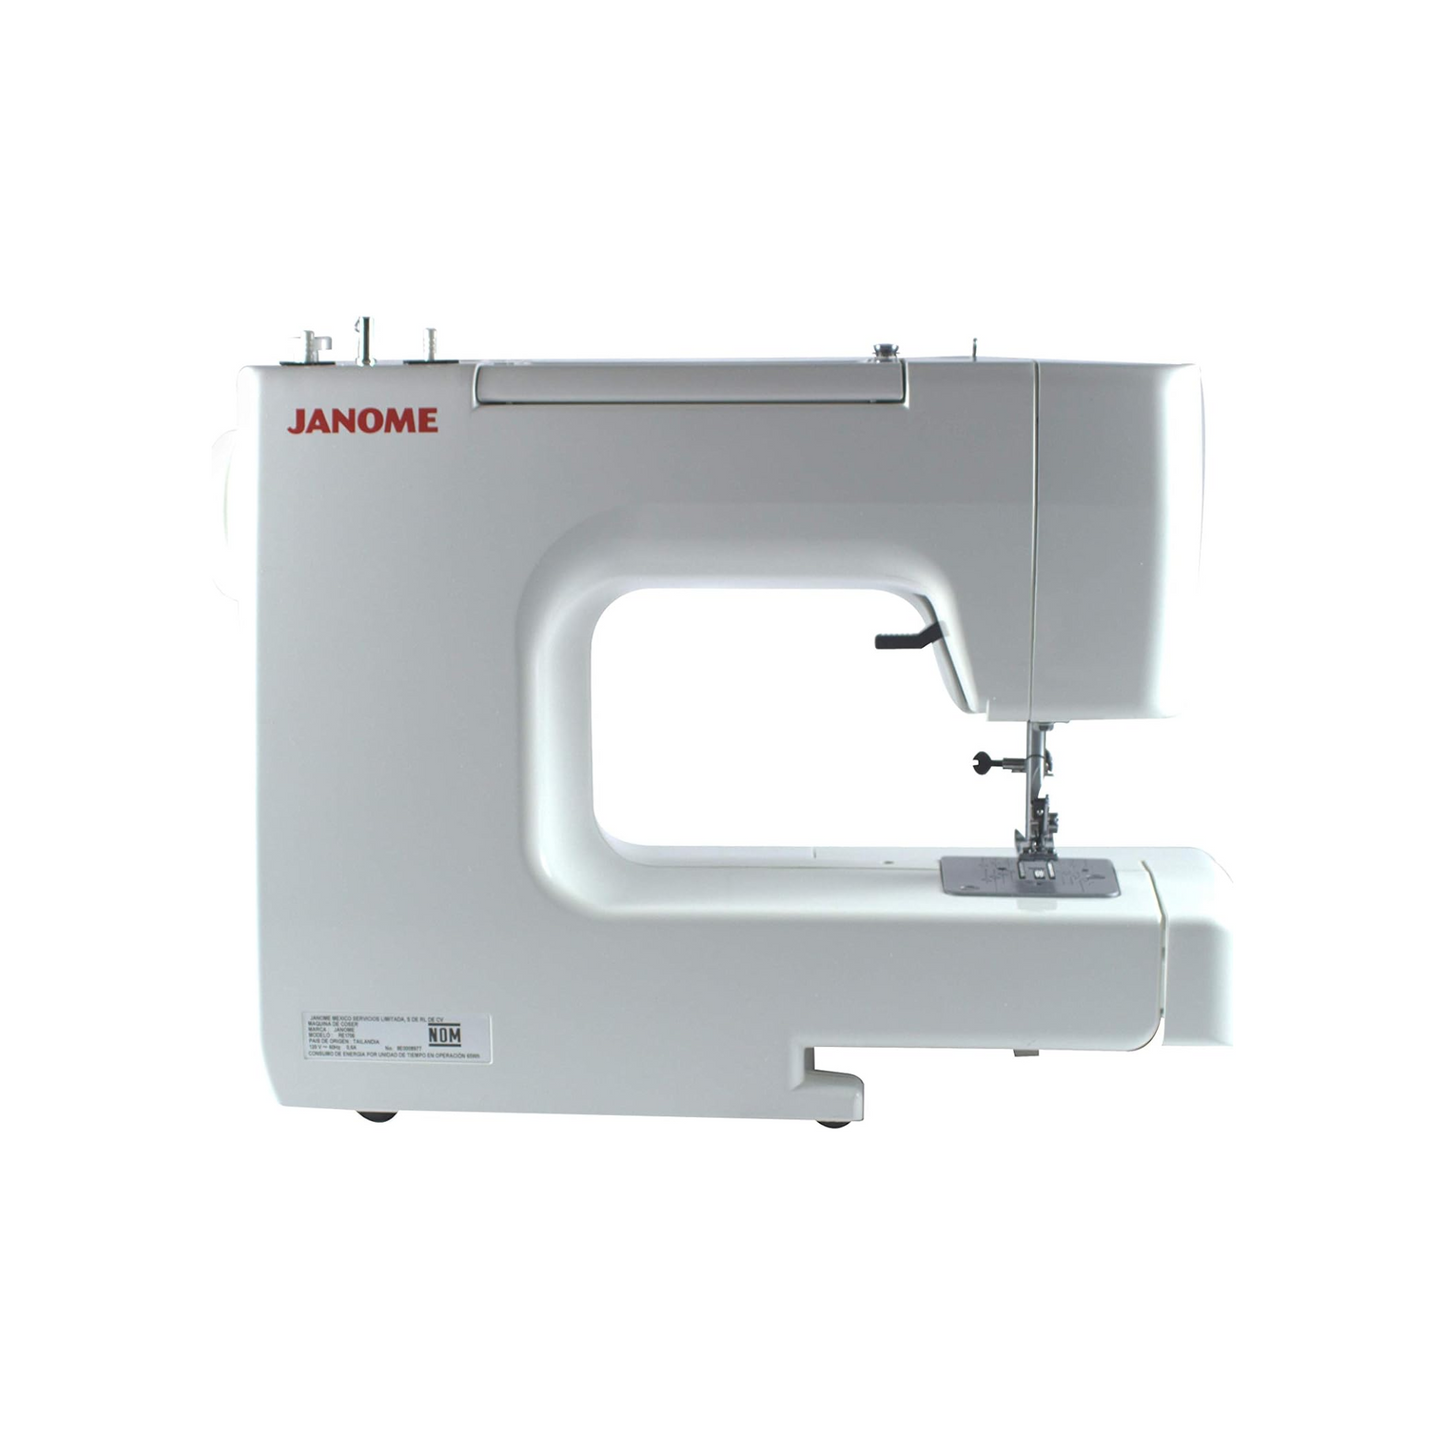 Janome Re1706 sewing machine